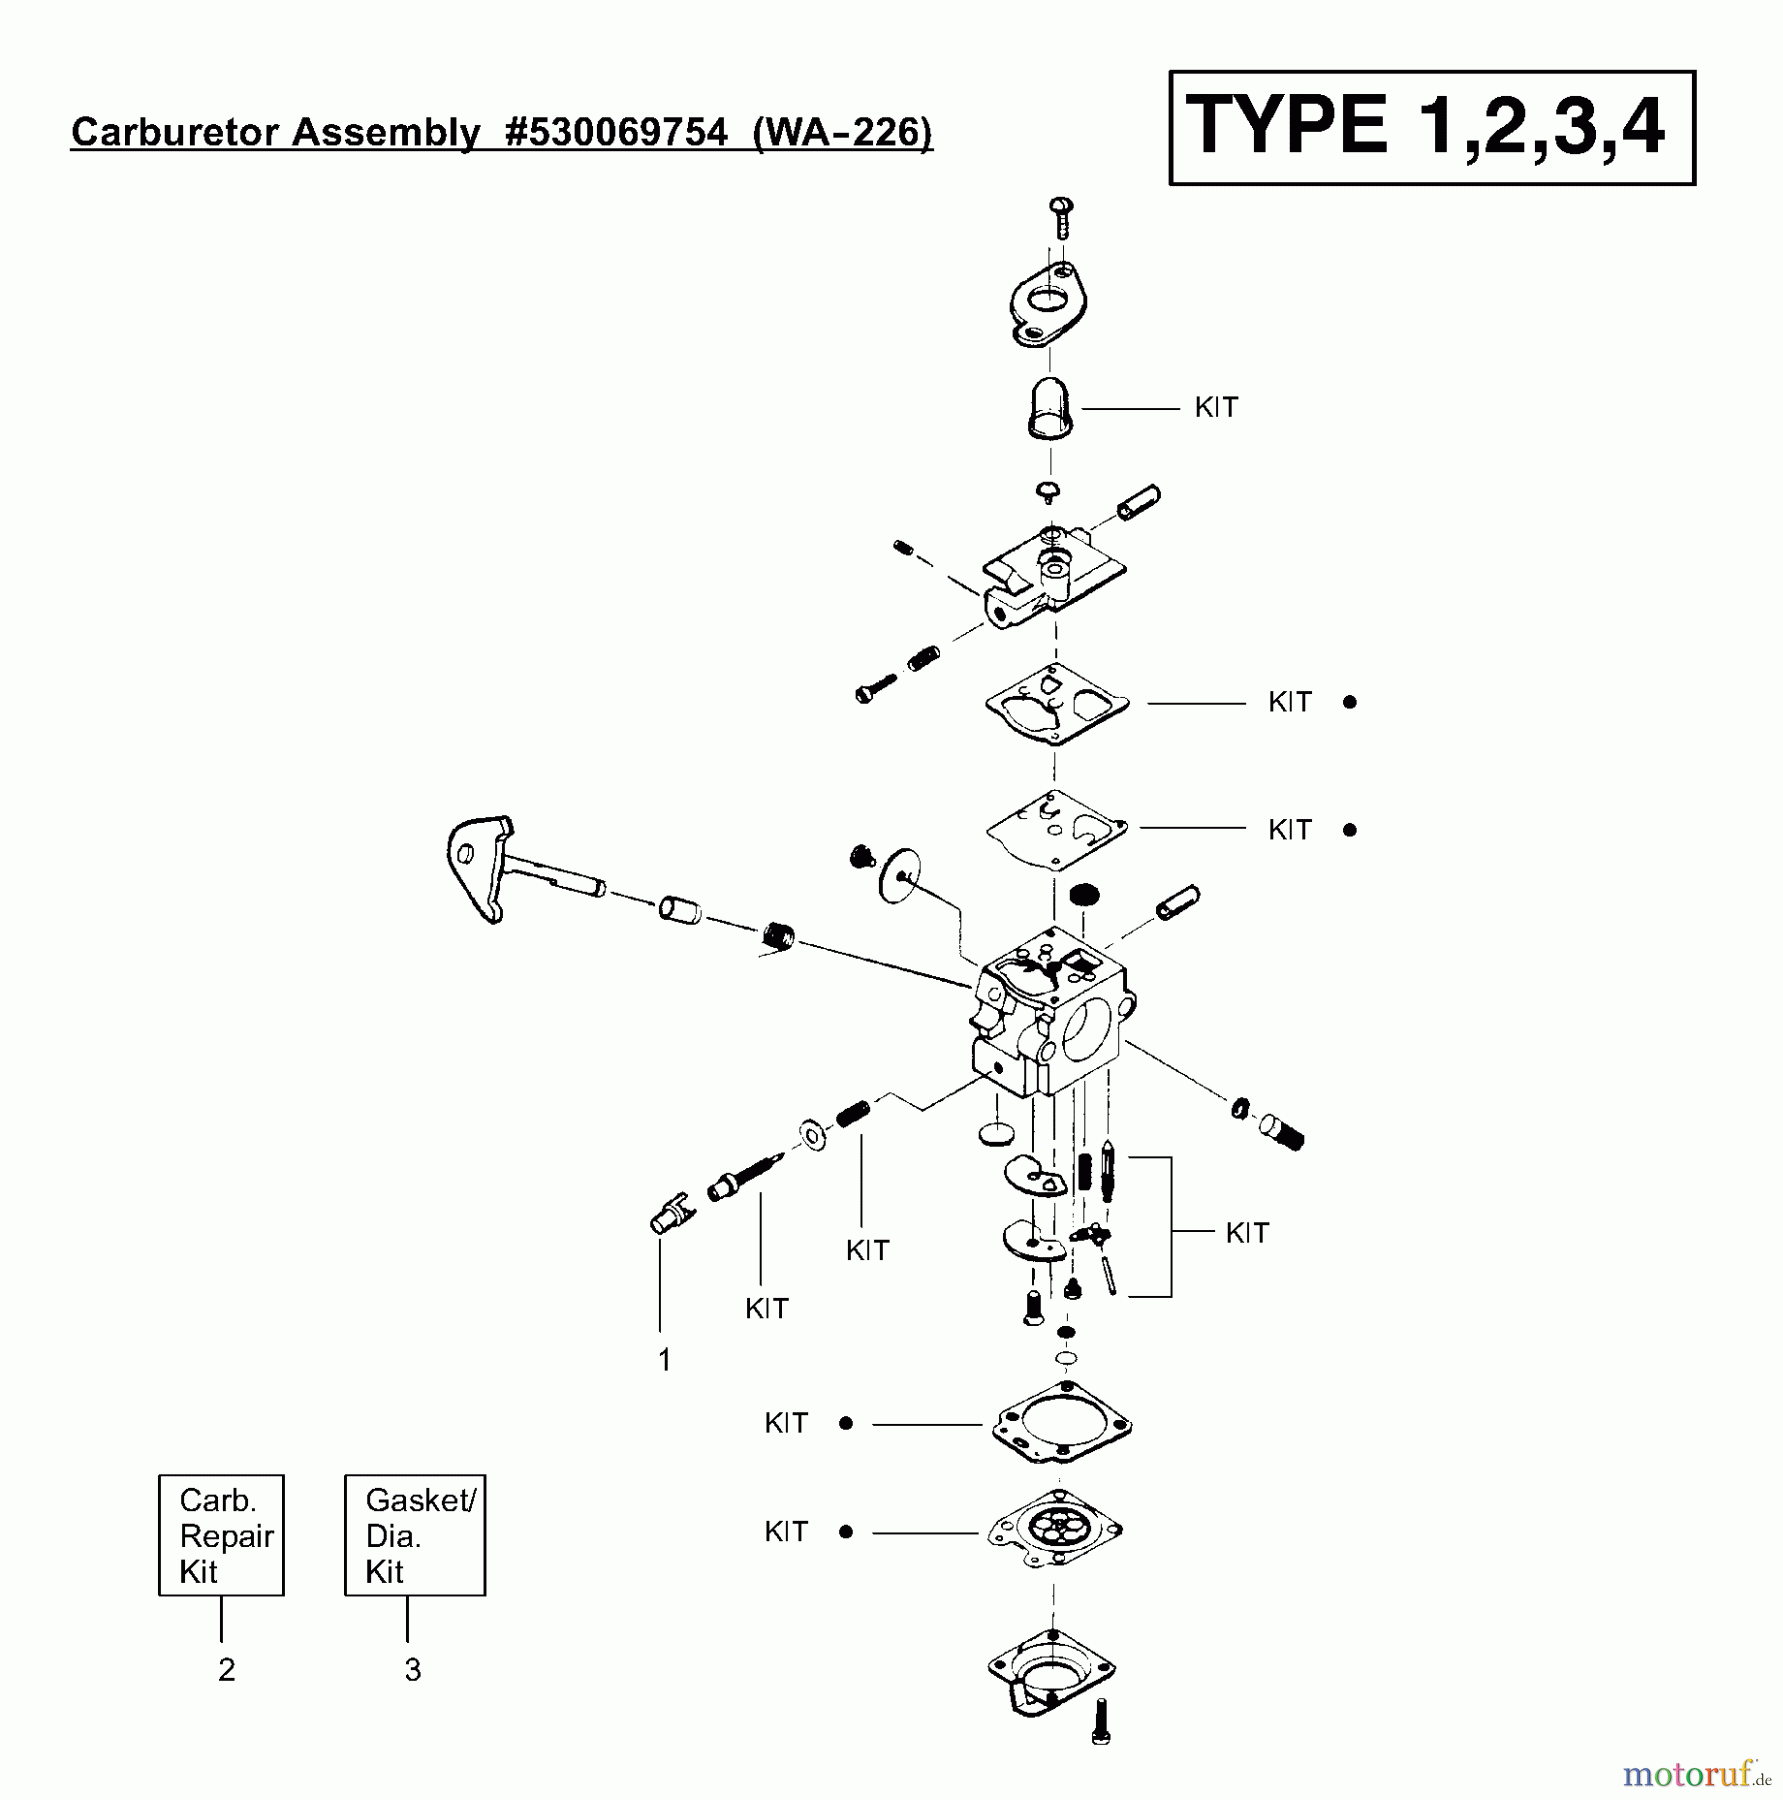  Poulan / Weed Eater Motorsensen, Trimmer TE500CXL (Type 4) - Weed Eater String Trimmer Carburetor Assembly (WA226) P/N 530069754